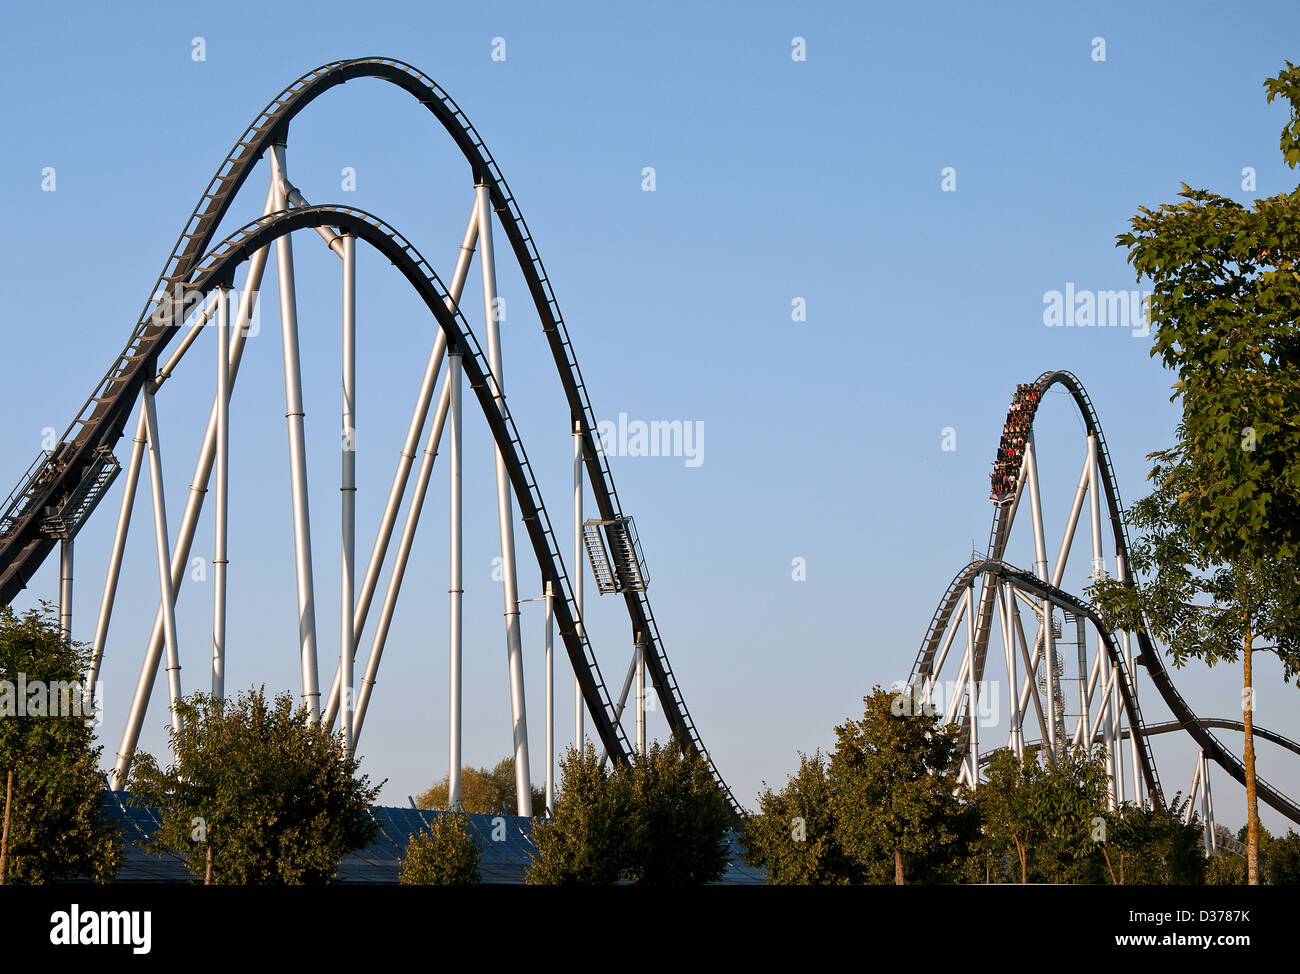 Rollercoaster in Europapark Rust, Germany Stock Photo